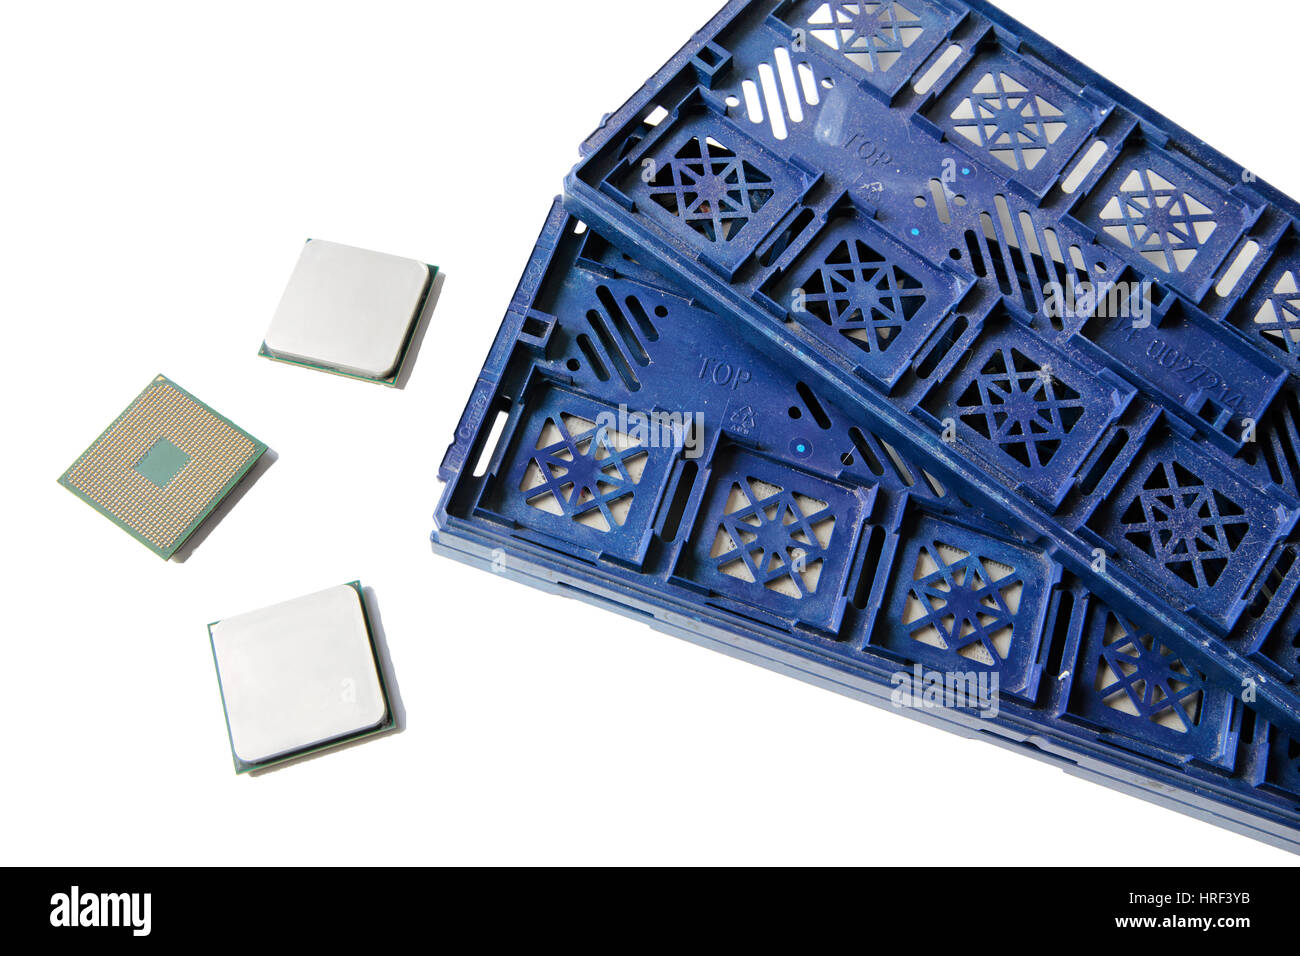 AMD CPU. AM4 Ryzen. Original packing of AMD processors Stock Photo - Alamy